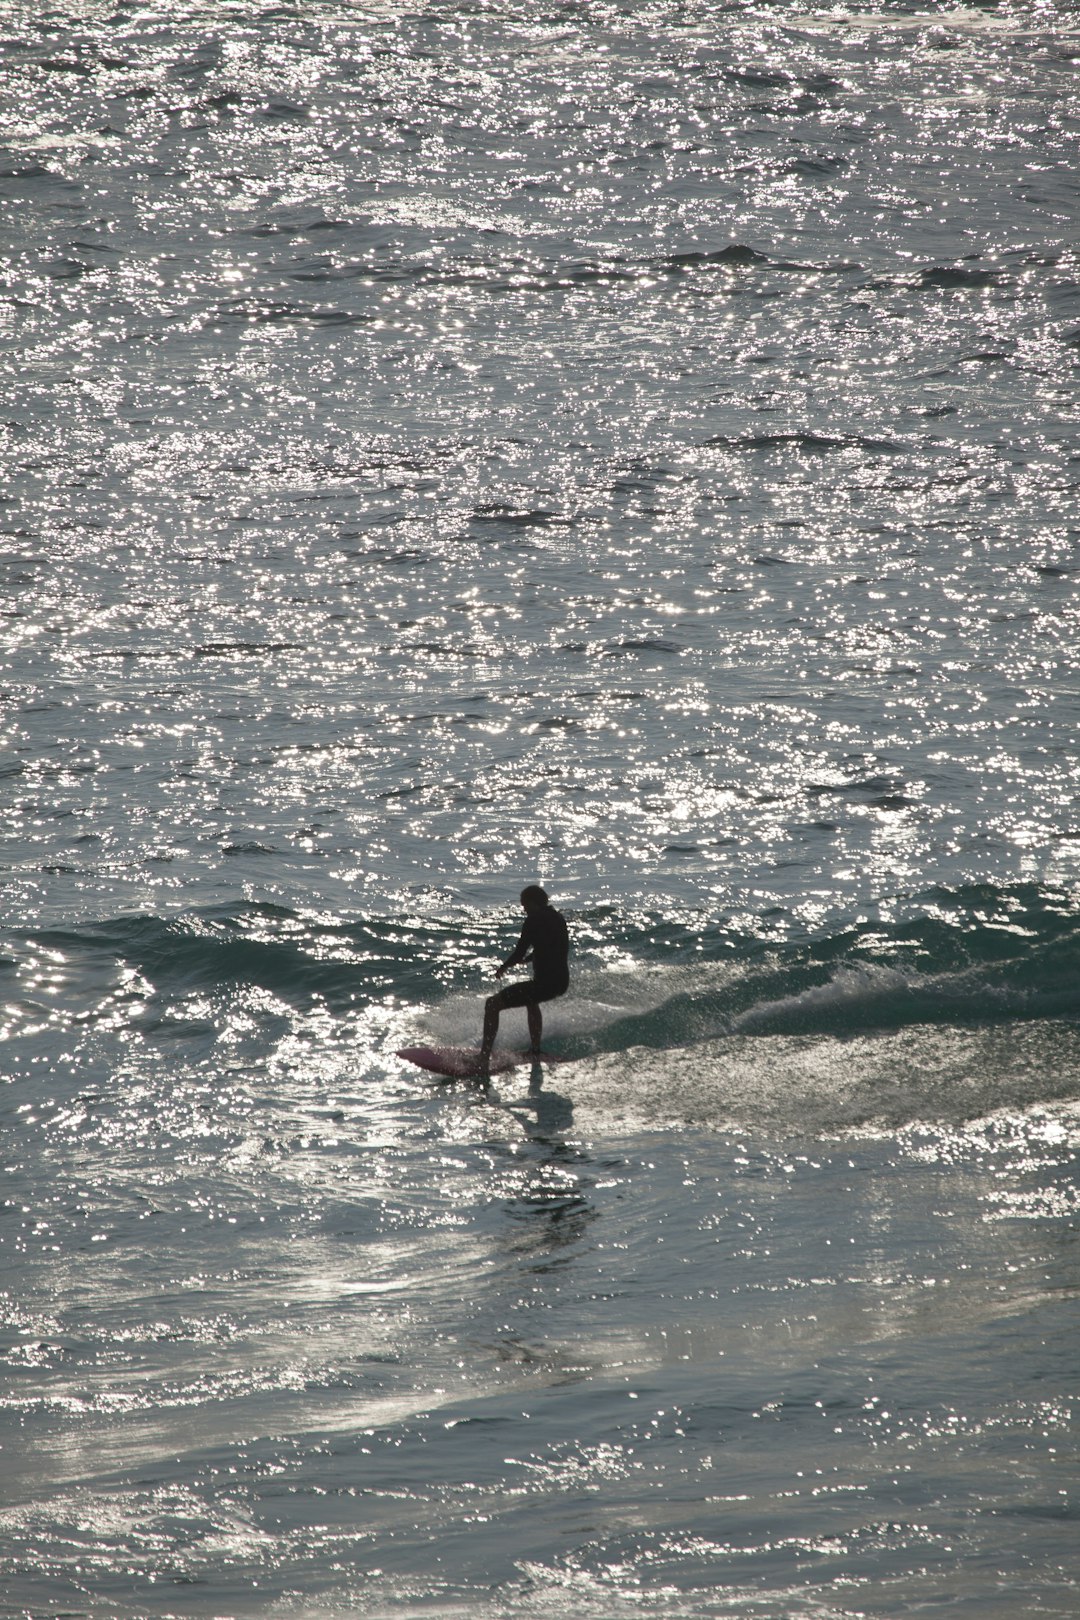 Surfing photo spot Tamarama Beach Manly